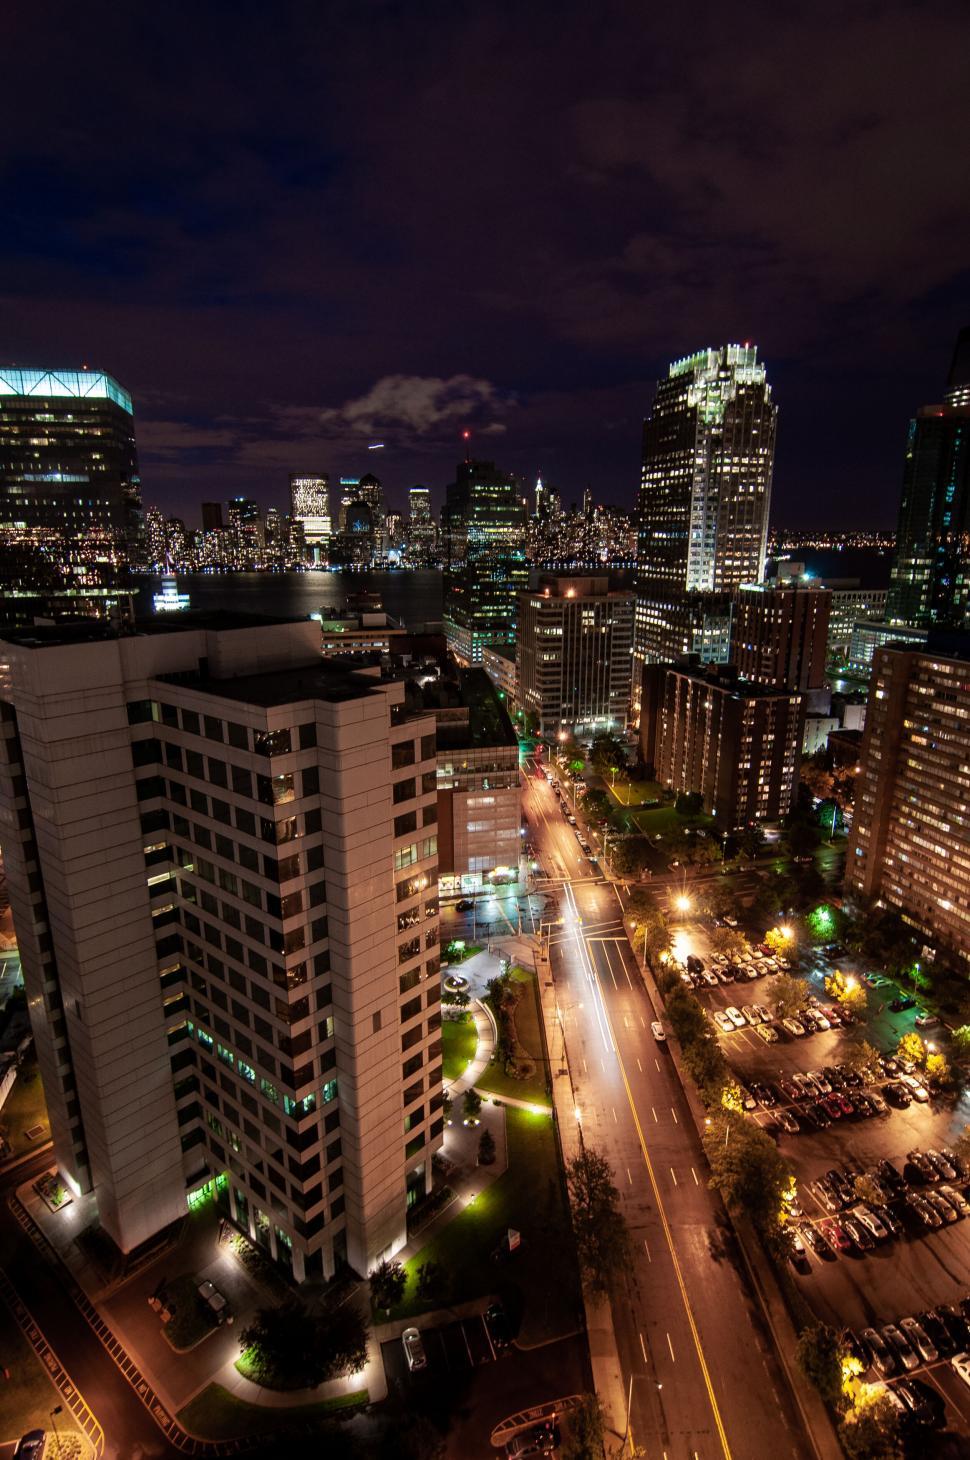 Free Image of Twilight cityscape with illuminated buildings 